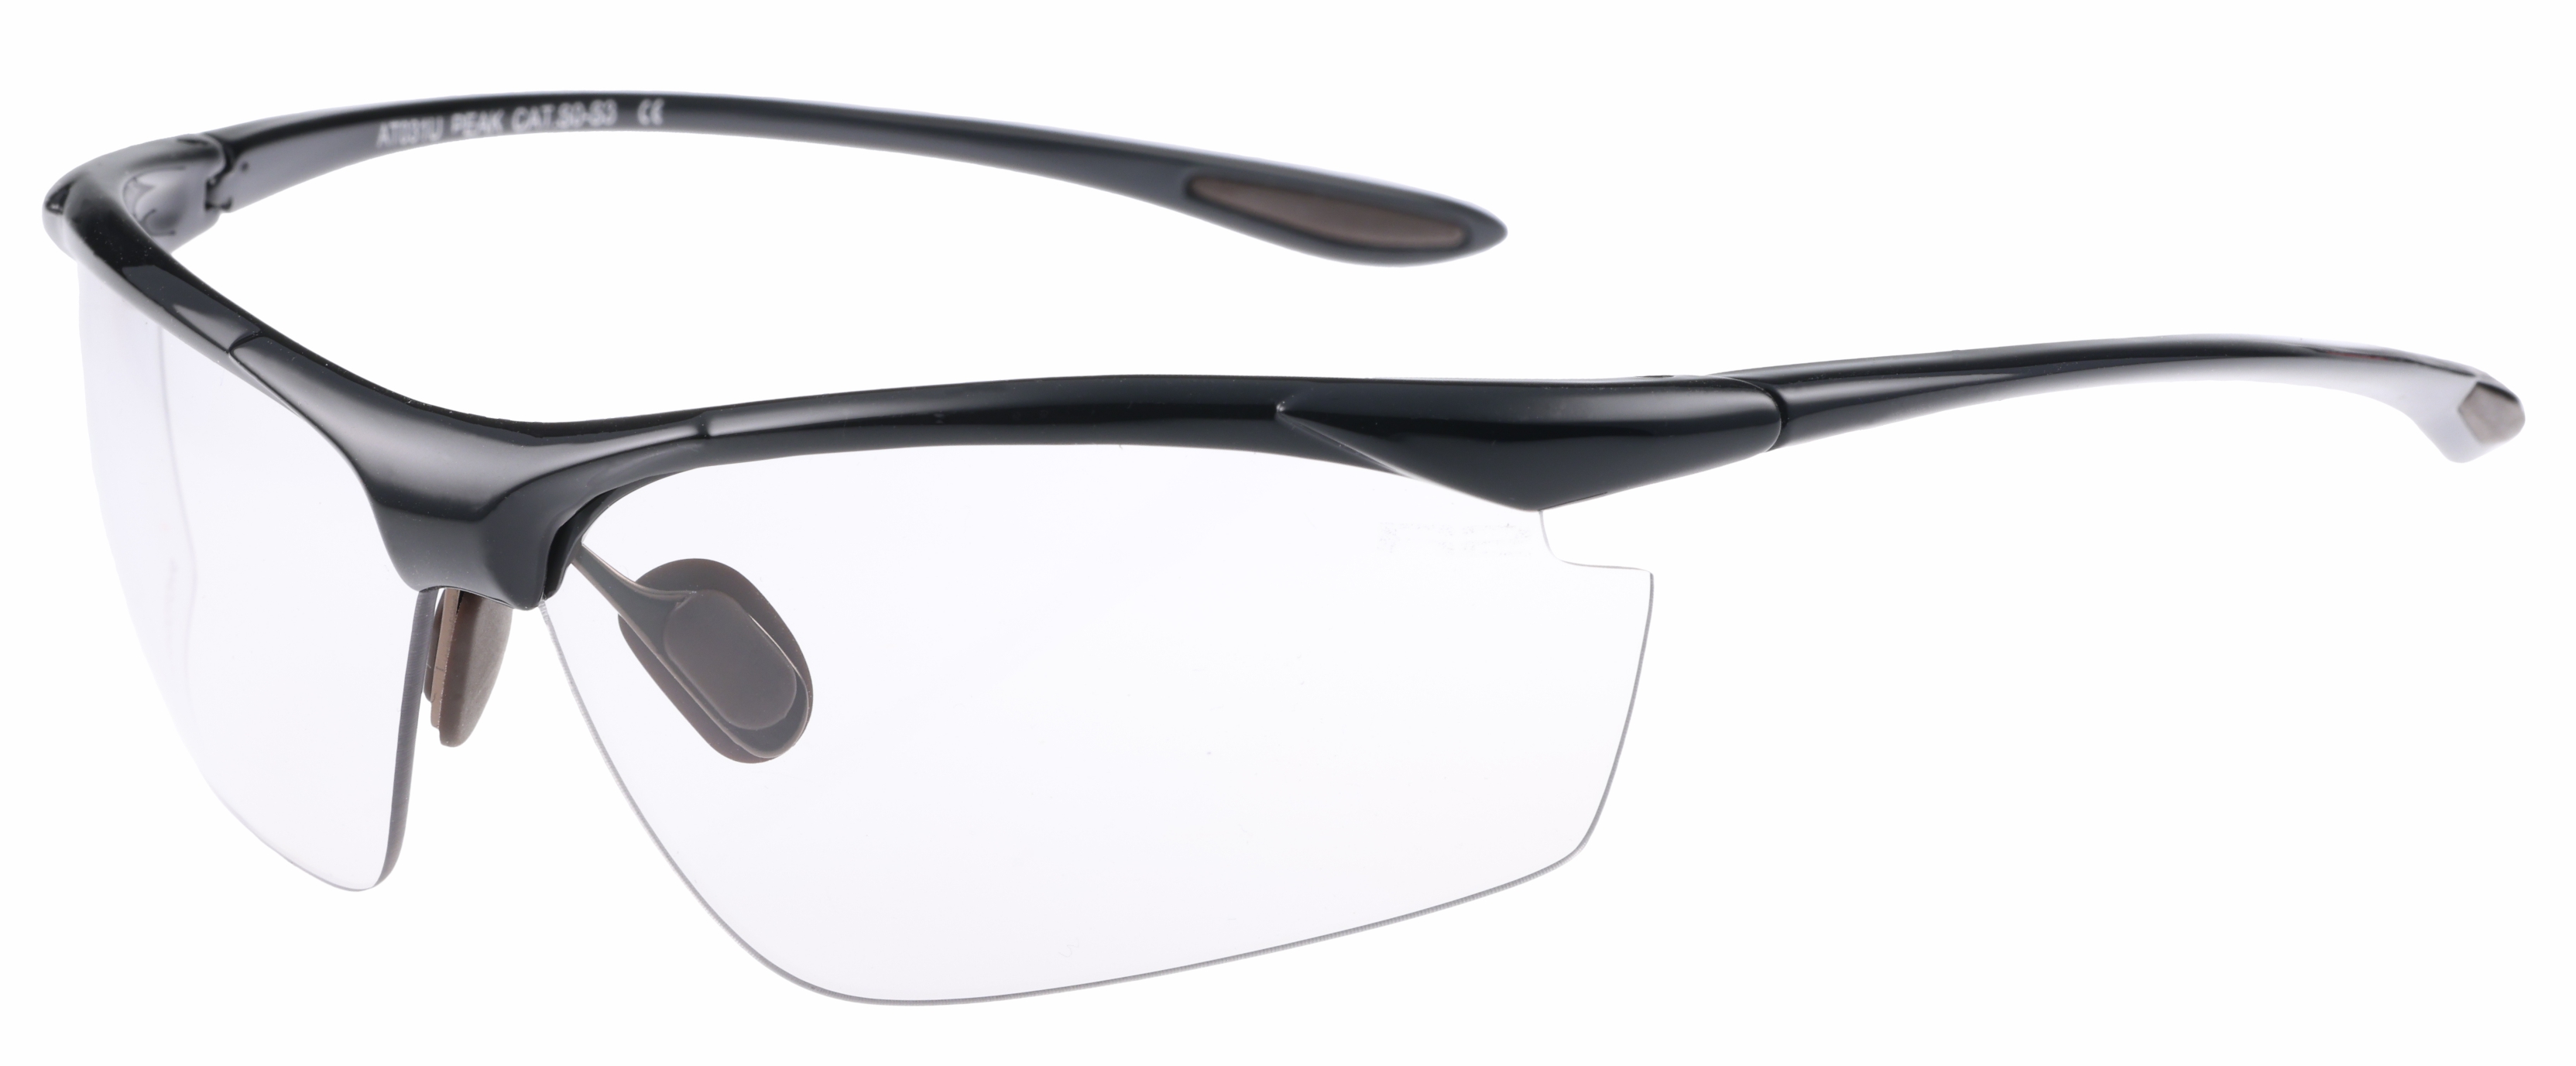 Photochromic sunglasses R2 PEAK AT031U standard